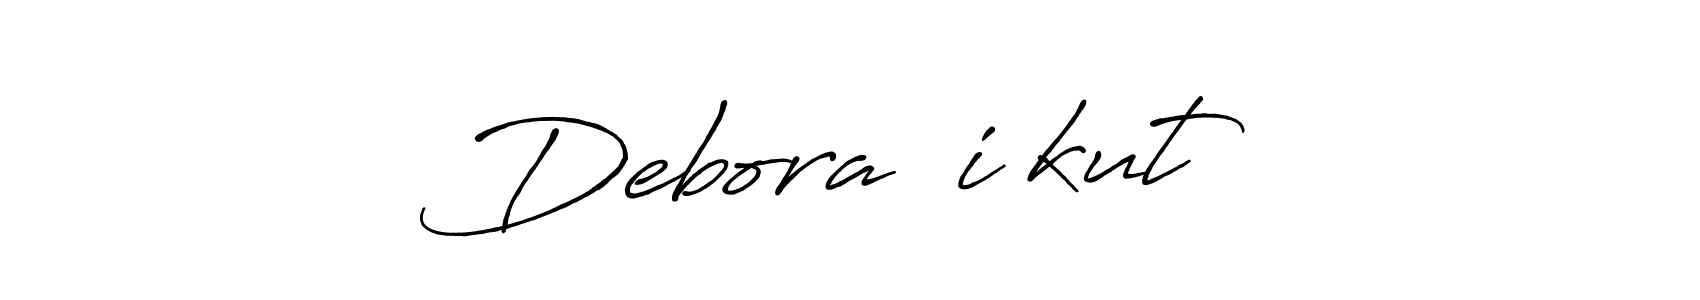 How to Draw Debora Šiškutė signature style? Antro_Vectra_Bolder is a latest design signature styles for name Debora Šiškutė. Debora Šiškutė signature style 7 images and pictures png